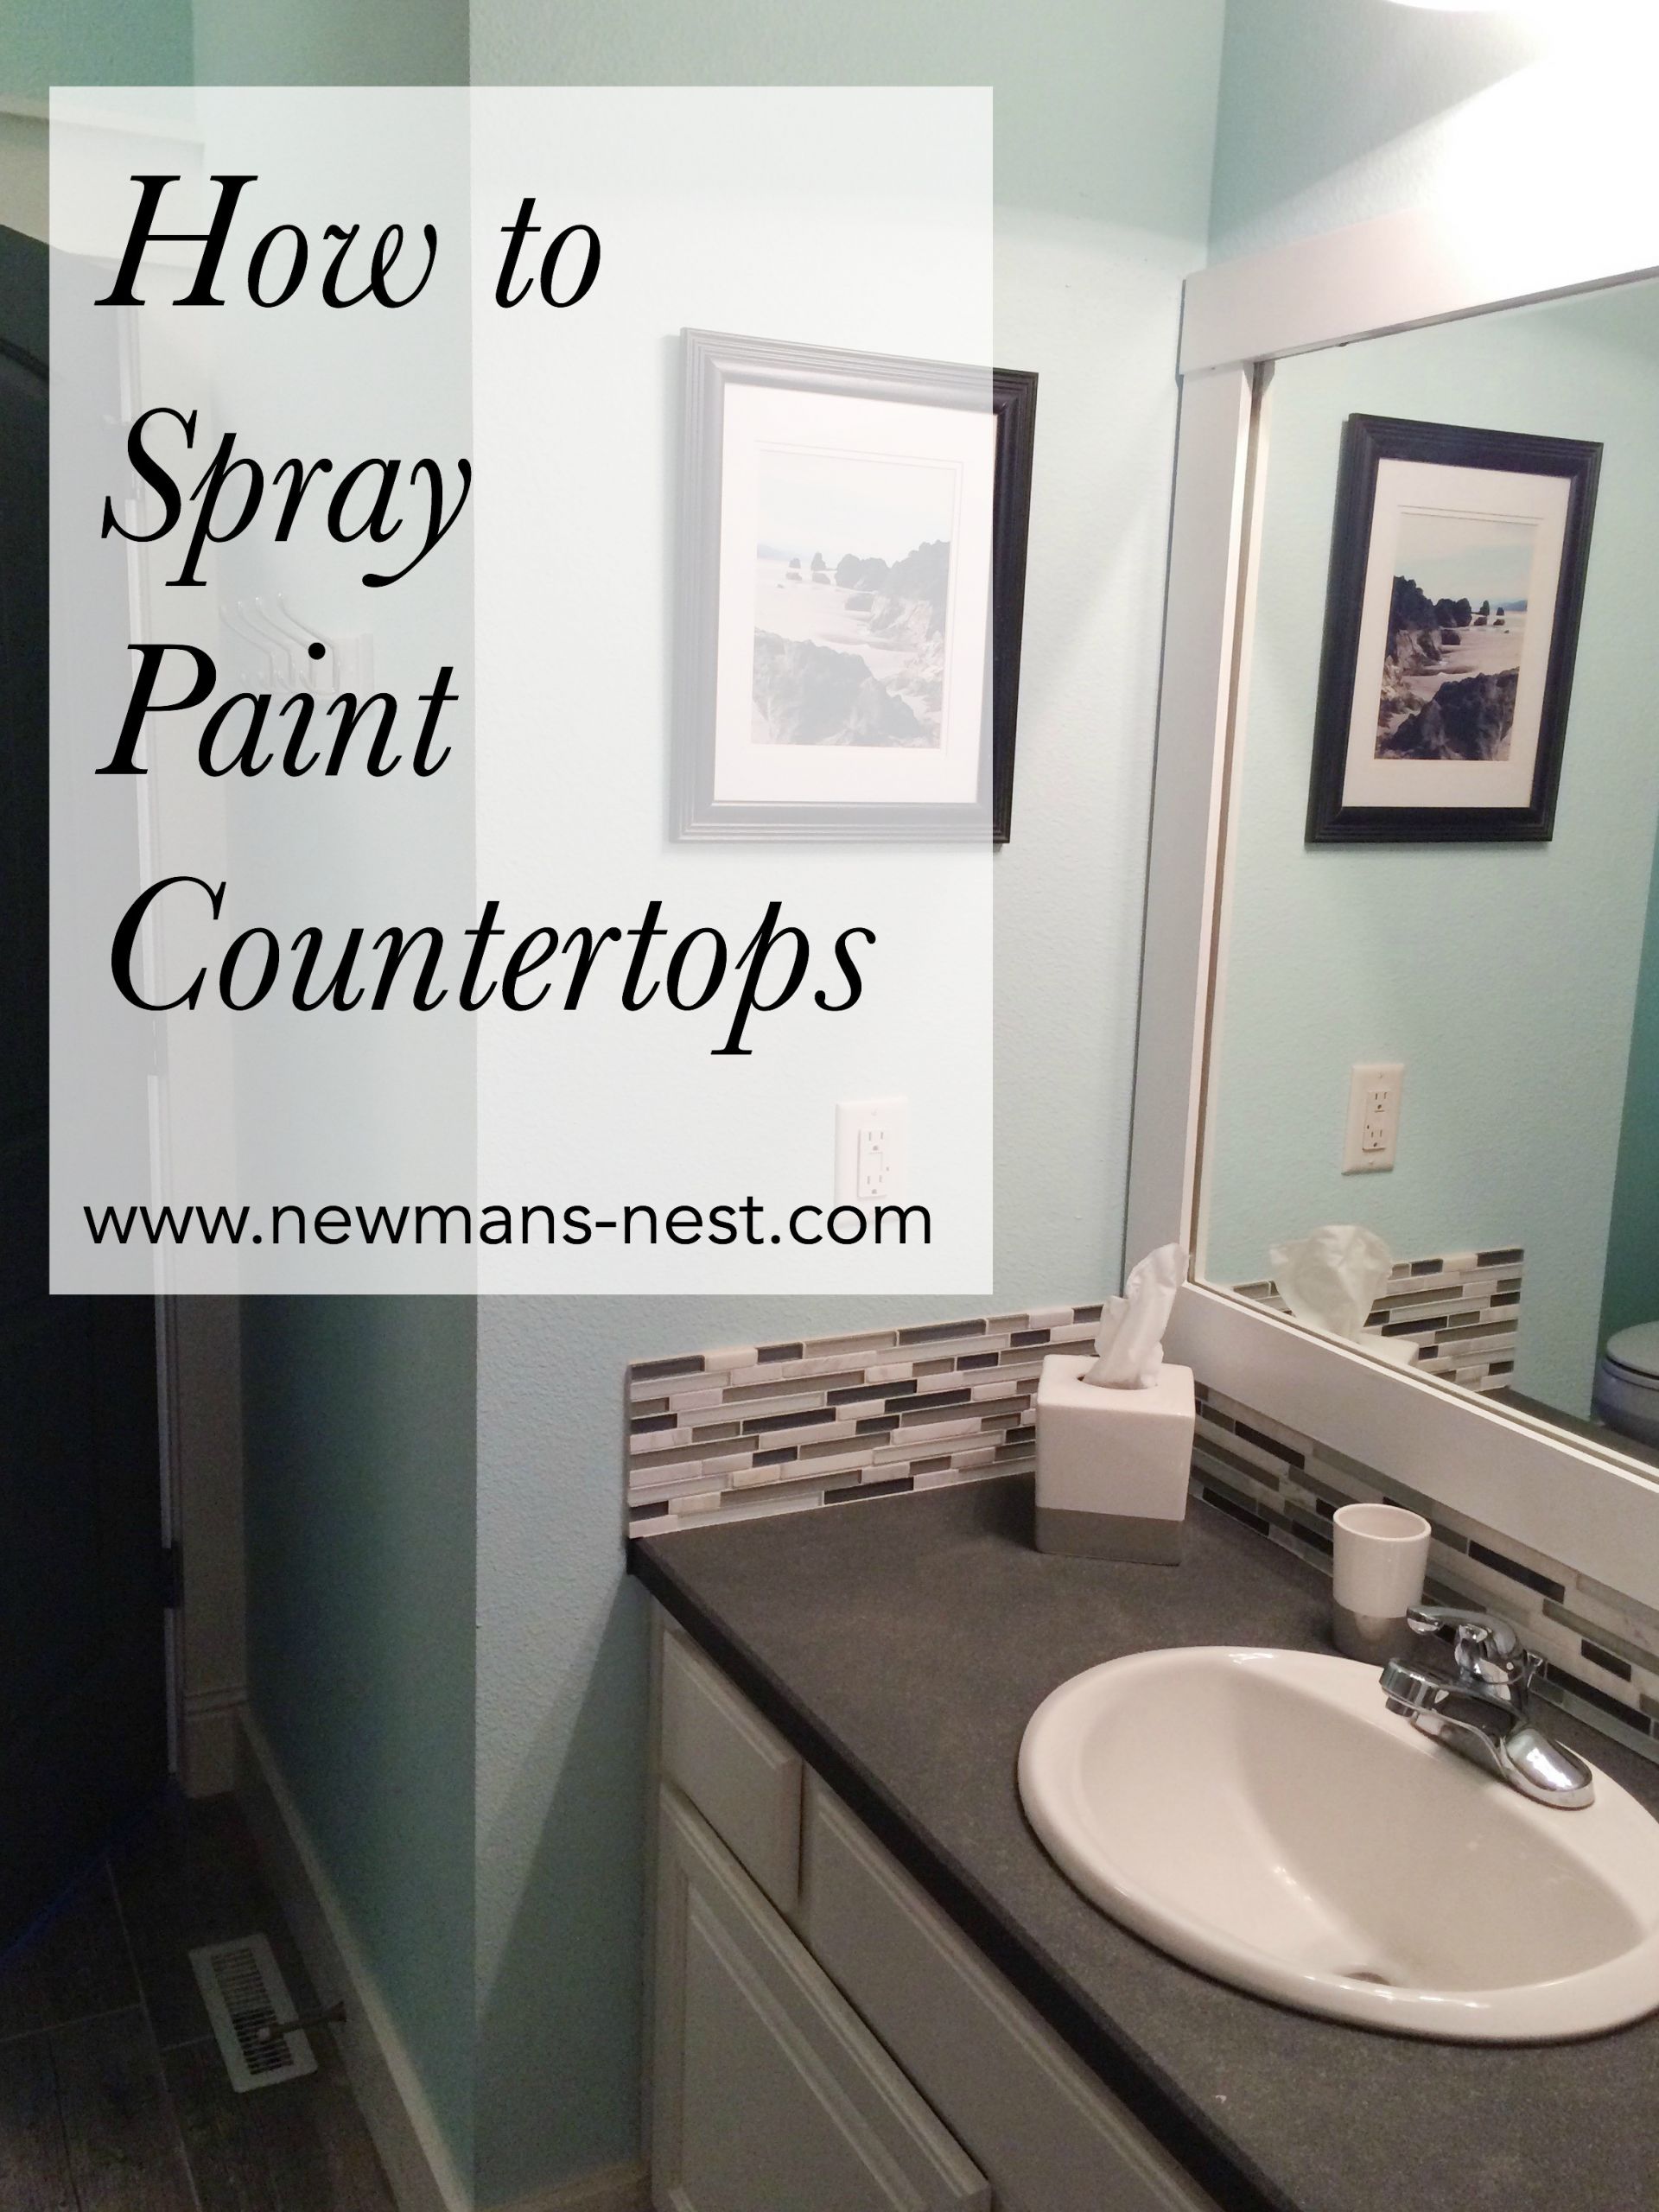 Spray Paint Bathroom Countertop
 Spray Painted Countertops